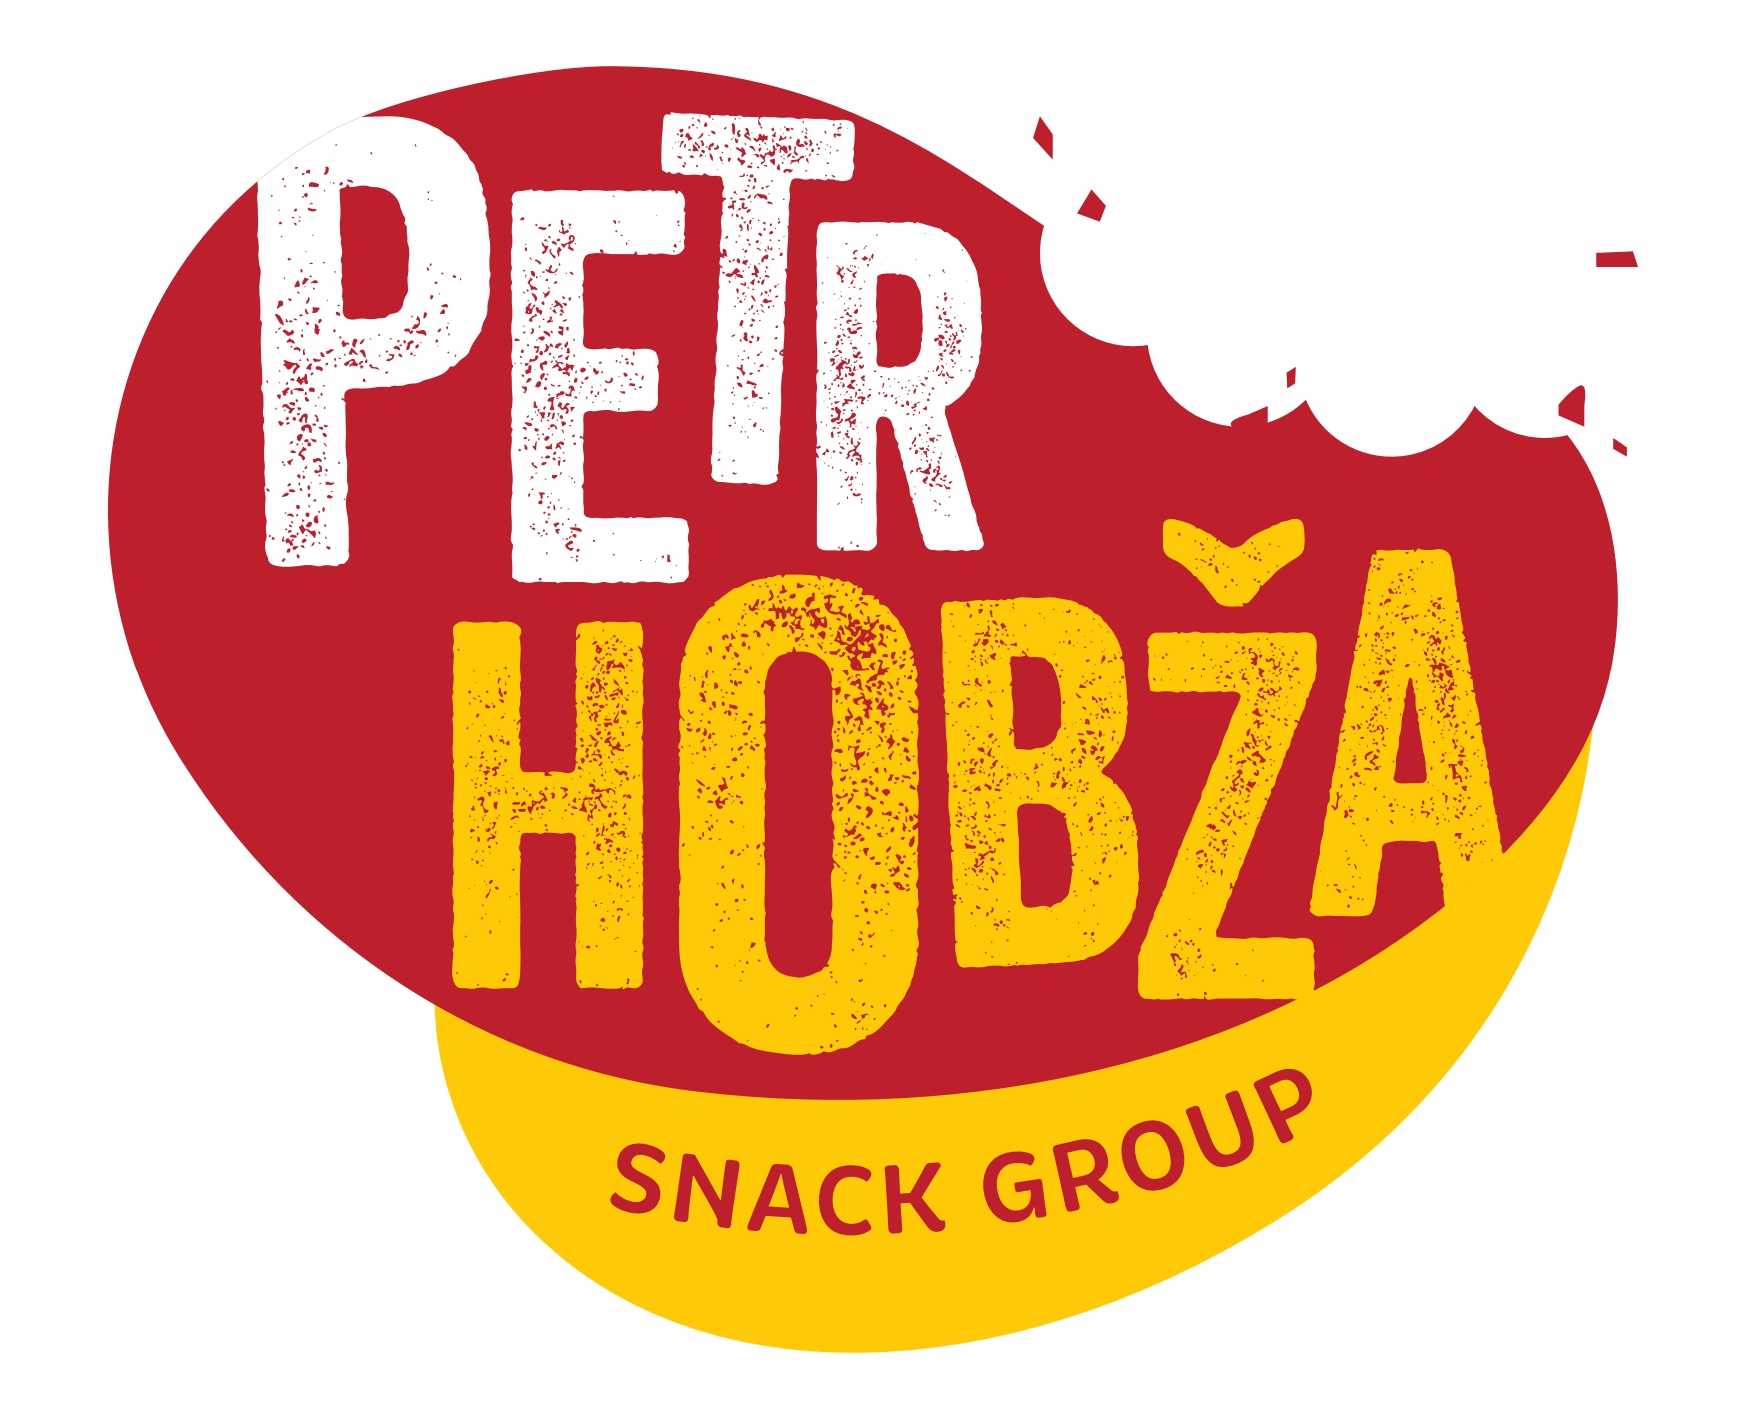 Hobza logo